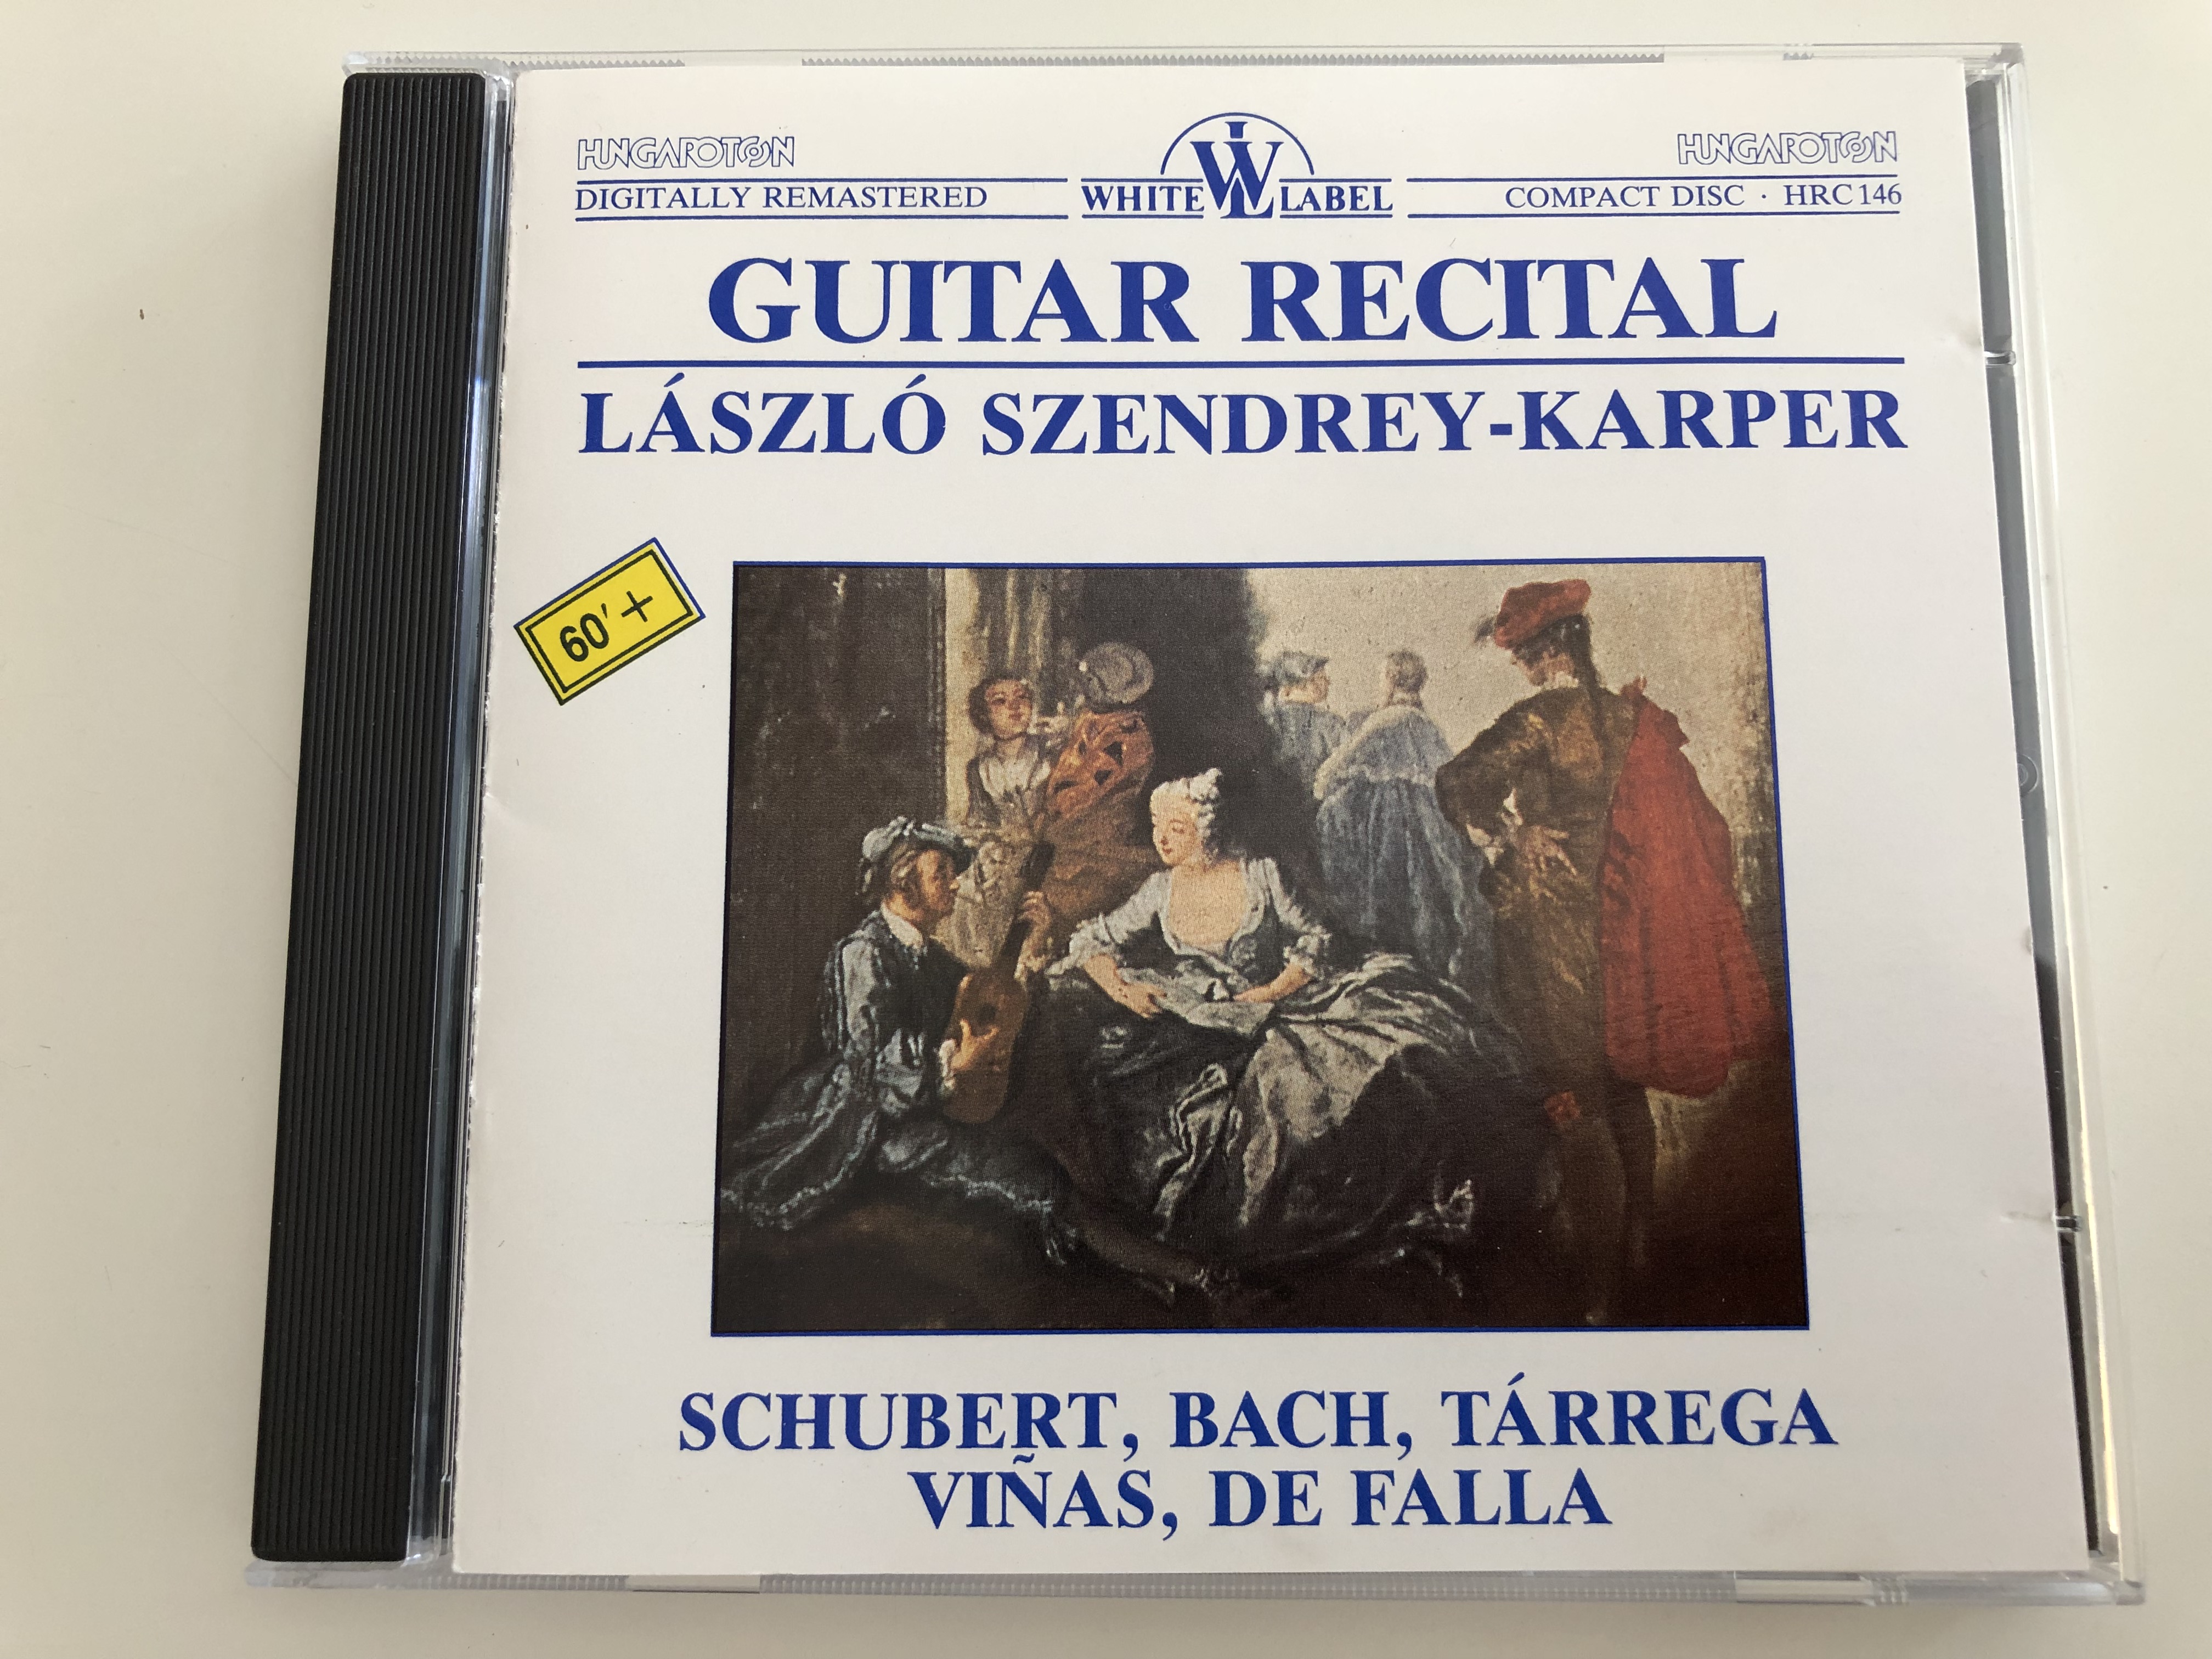 guitar-recital-l-szl-szendrey-karper-schubert-bach-t-rrega-vinas-de-falla-hugaroton-white-label-audio-cd-1990-hrc-146-1-.jpg